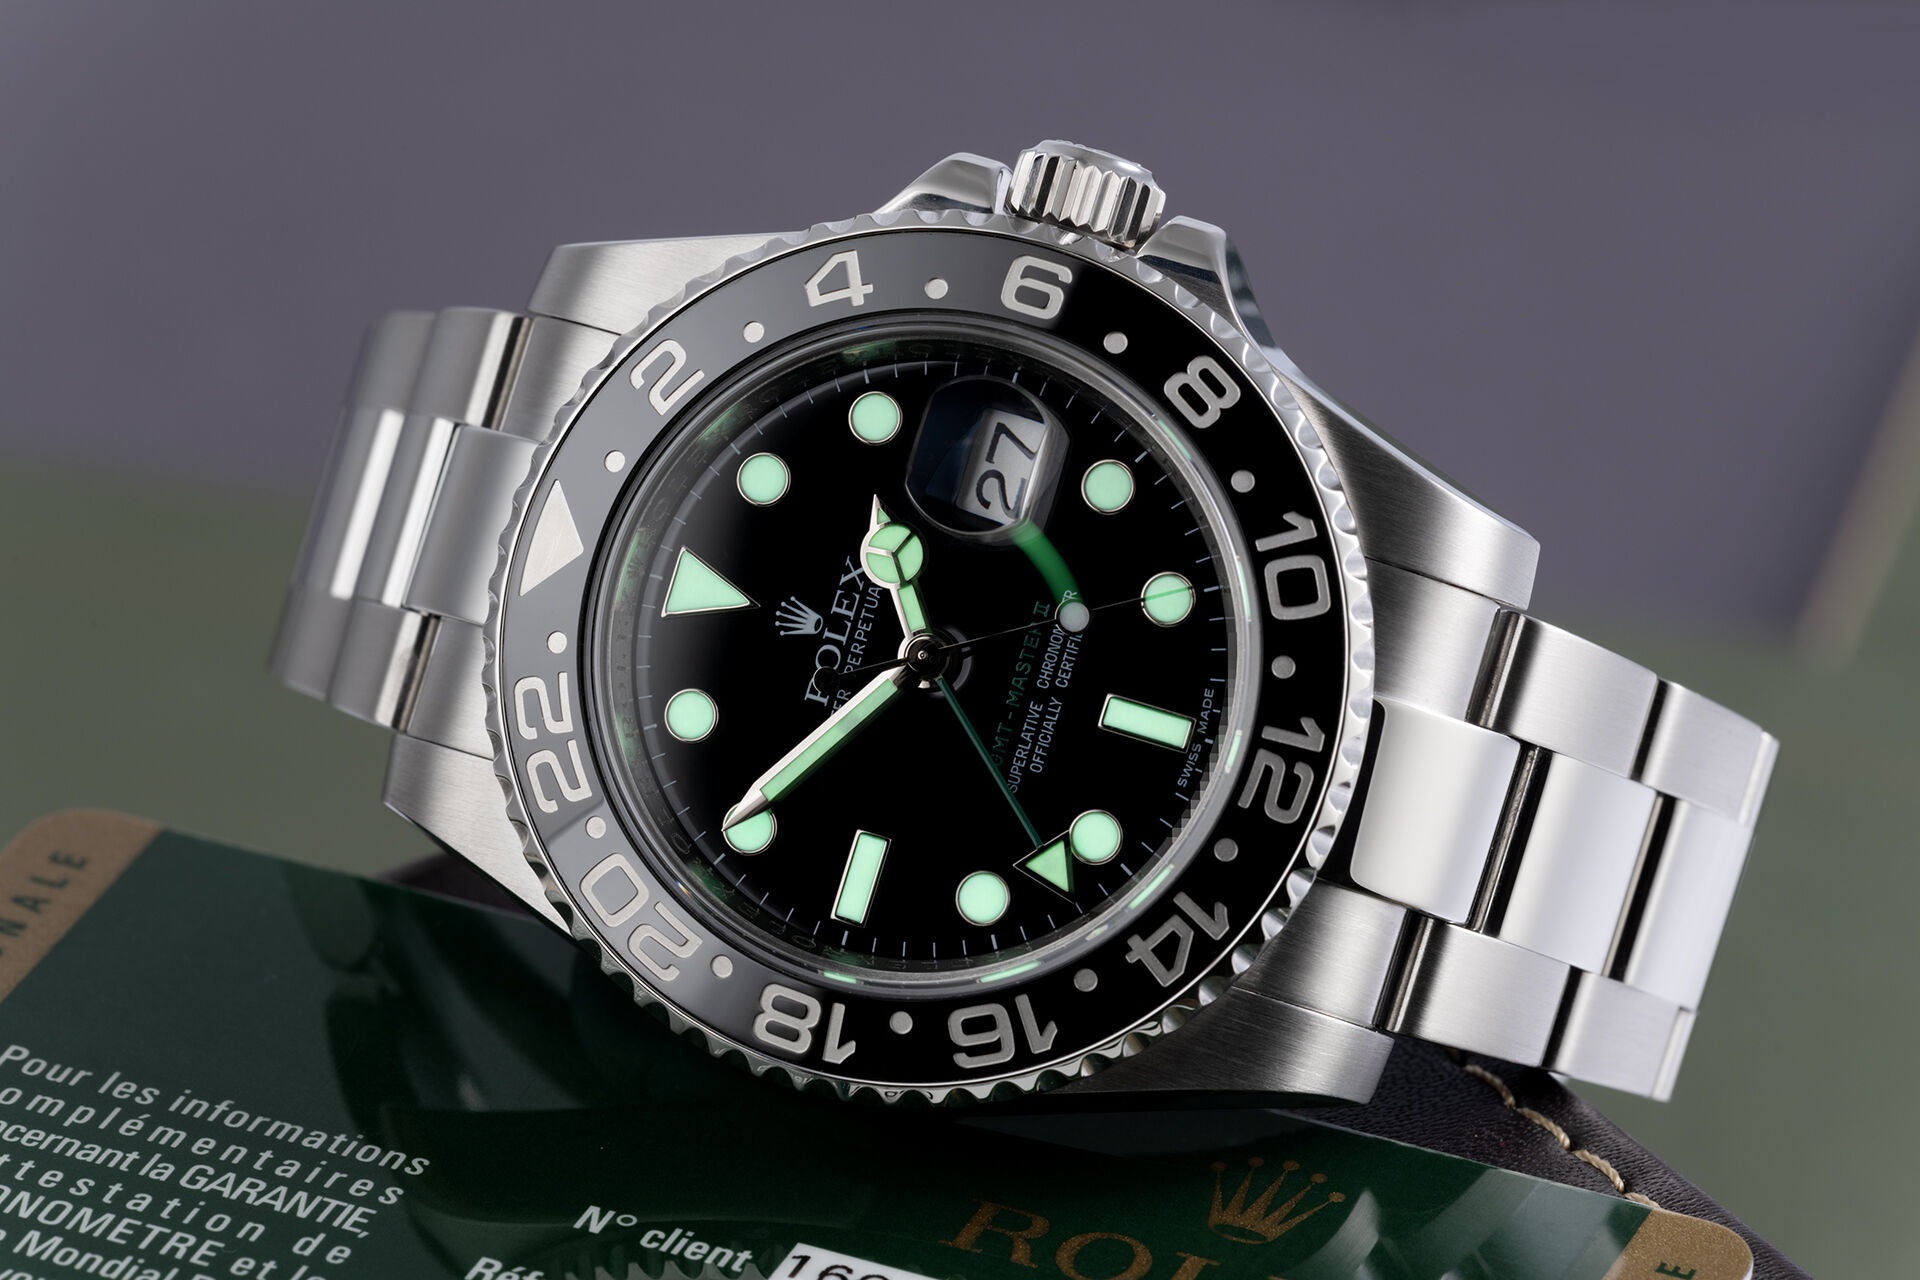 ref 116710LN | Box & Certificate - Final Series | Rolex GMT-Master II